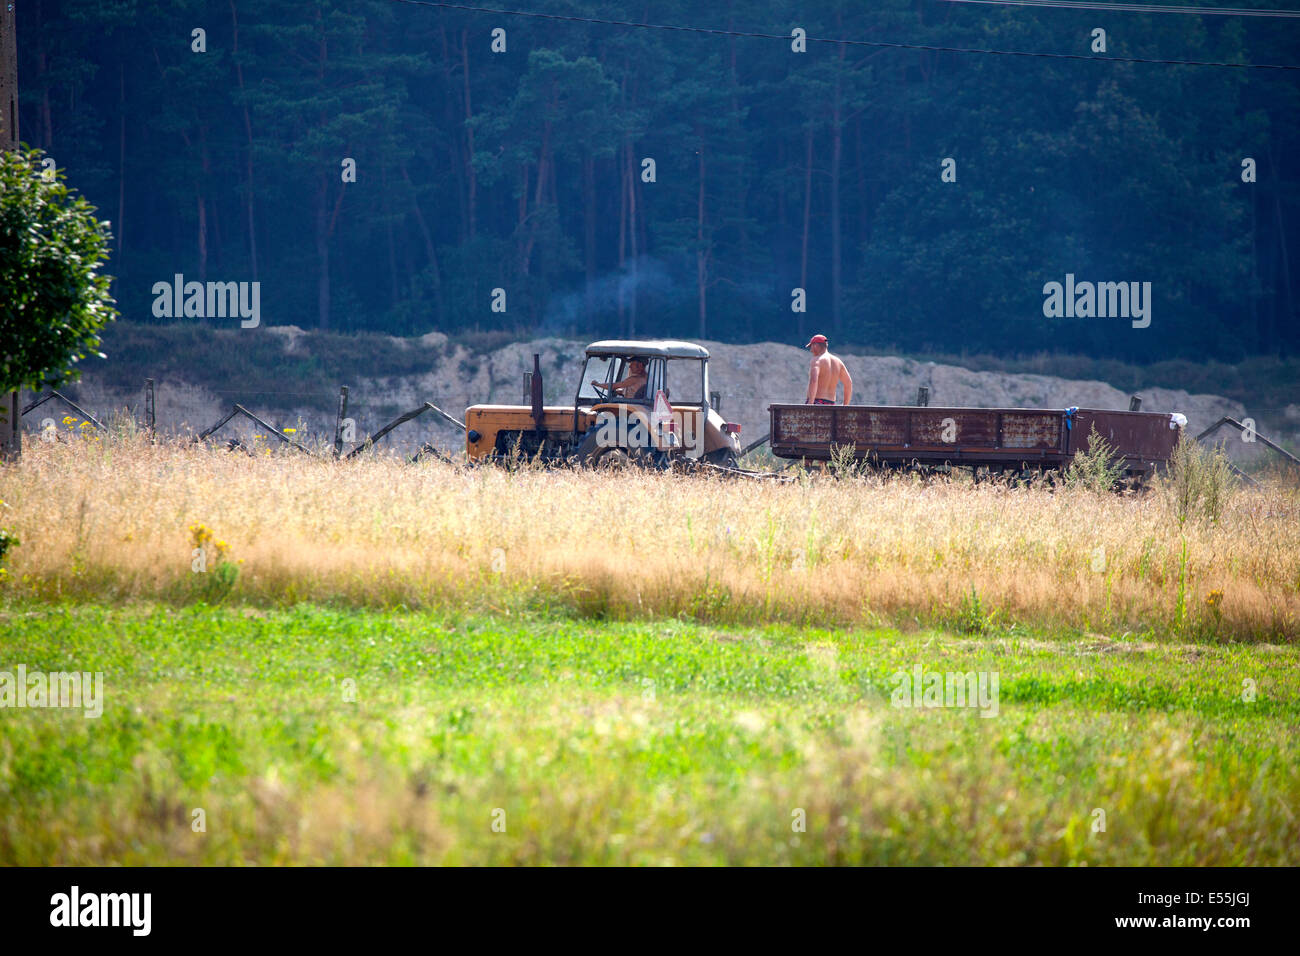 http://c8.alamy.com/comp/E55JGJ/polish-farmer-pulling-a-wagon-with-a-tractor-across-his-farm-field-E55JGJ.jpg